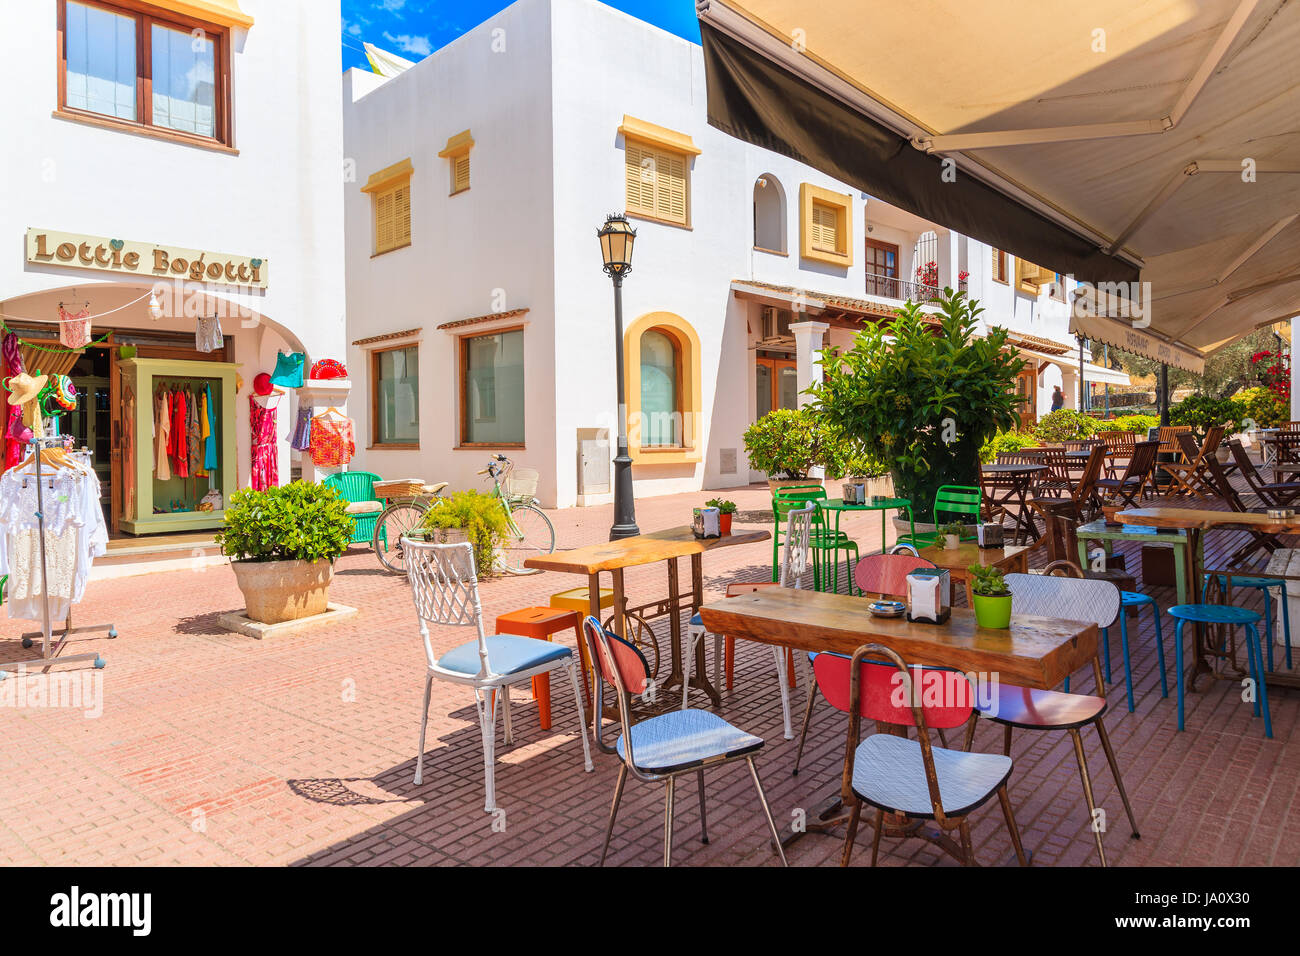 Insel IBIZA, Spanien - 18. Mai 2017: bunte Restauranttische auf Straße in Sant Carles de Peralta Dorf, Insel Ibiza, Spanien. Stockfoto